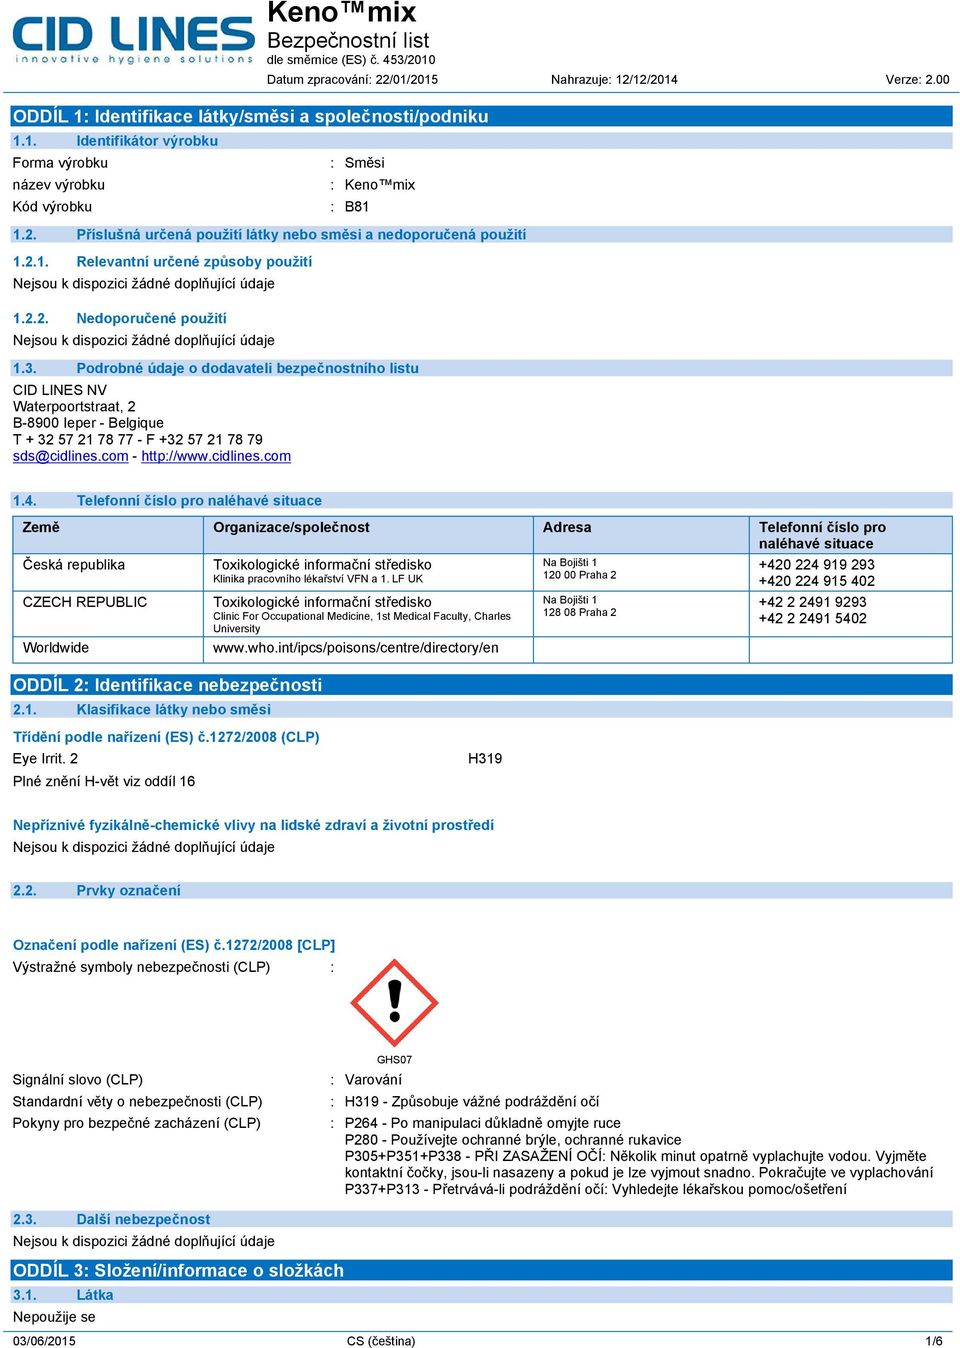 Podrobné údaje o dodavateli bezpečnostního listu CID LINES NV Waterpoortstraat, 2 B-8900 Ieper - Belgique T + 32 57 21 78 77 - F +32 57 21 78 79 sds@cidlines.com - http://www.cidlines.com 1.4.